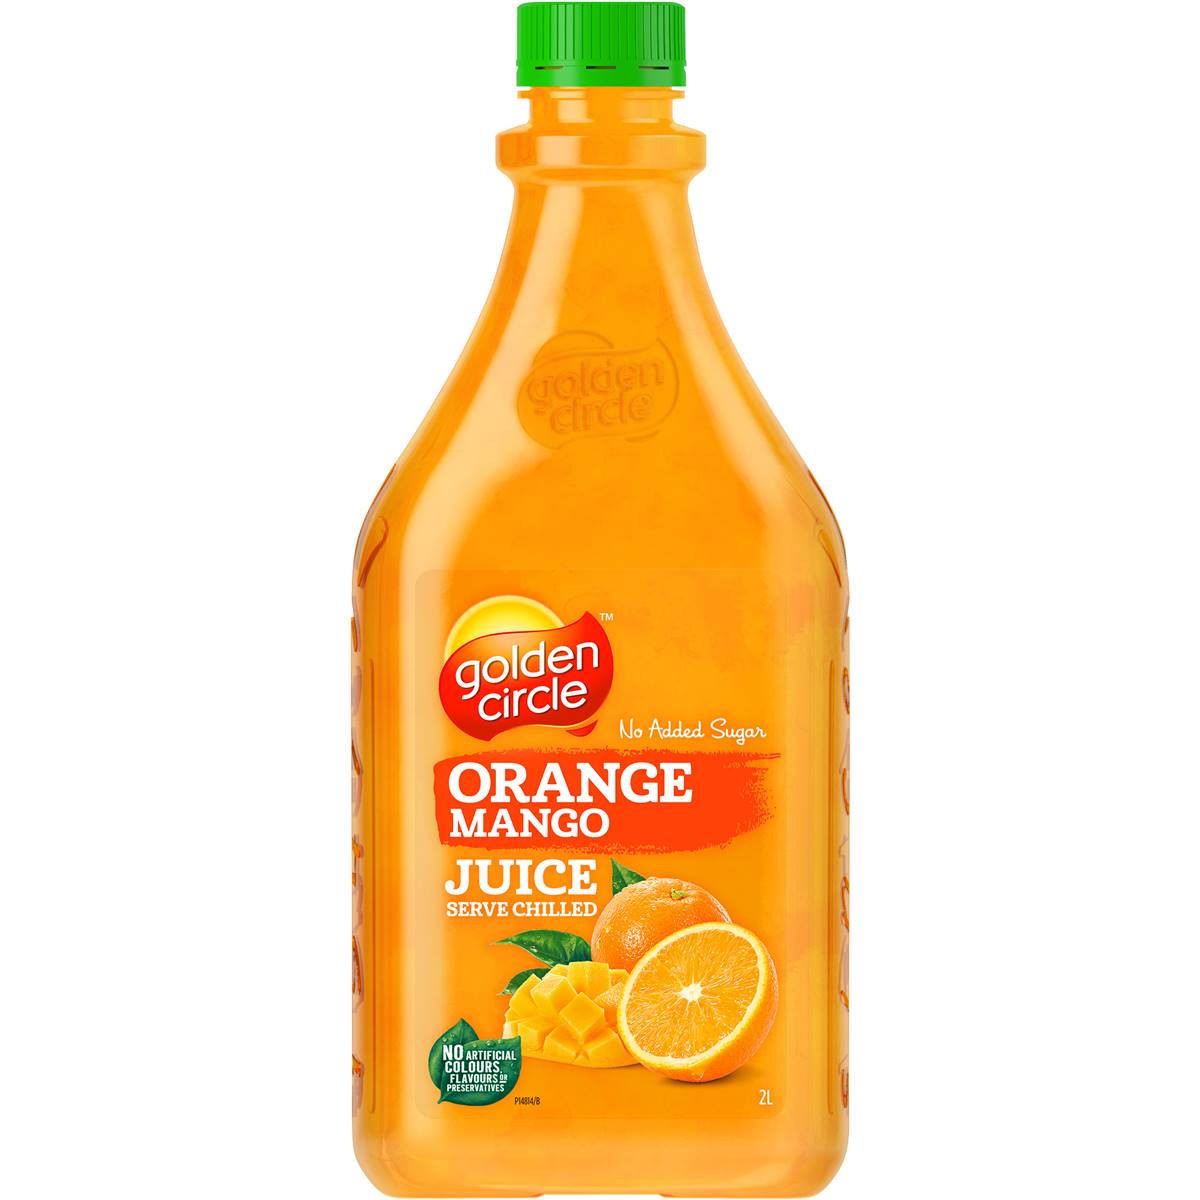 Golden Circle Juice Orange Mango 2L